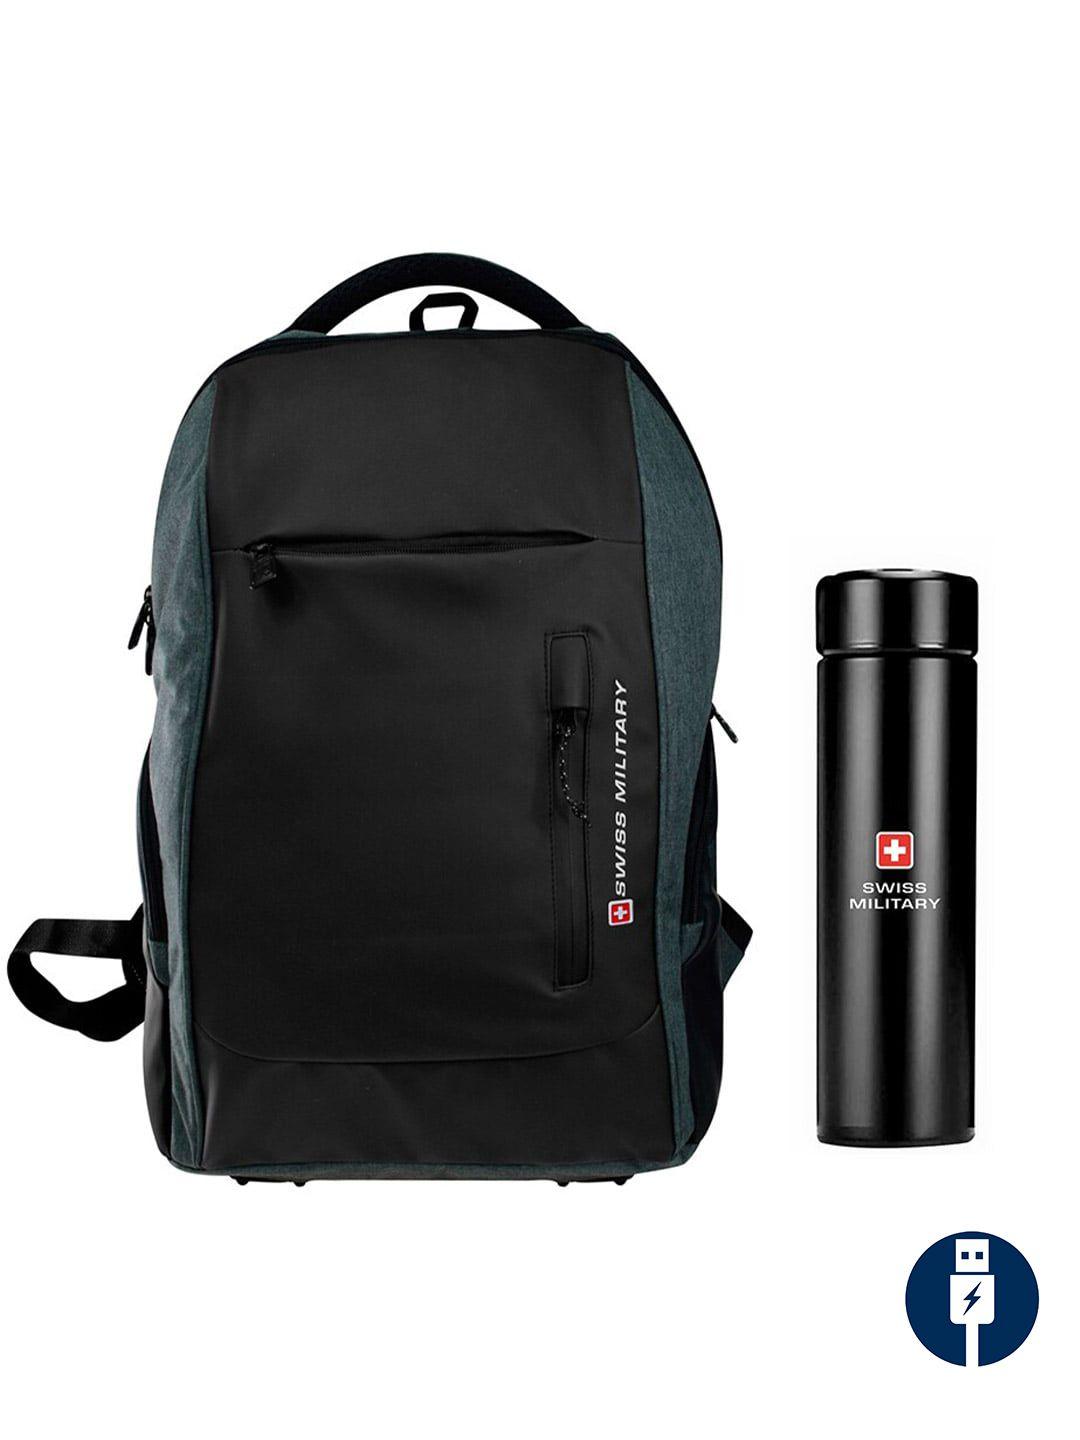 swiss military unisex grey & black usb charging port backpack with digital vacuum flask